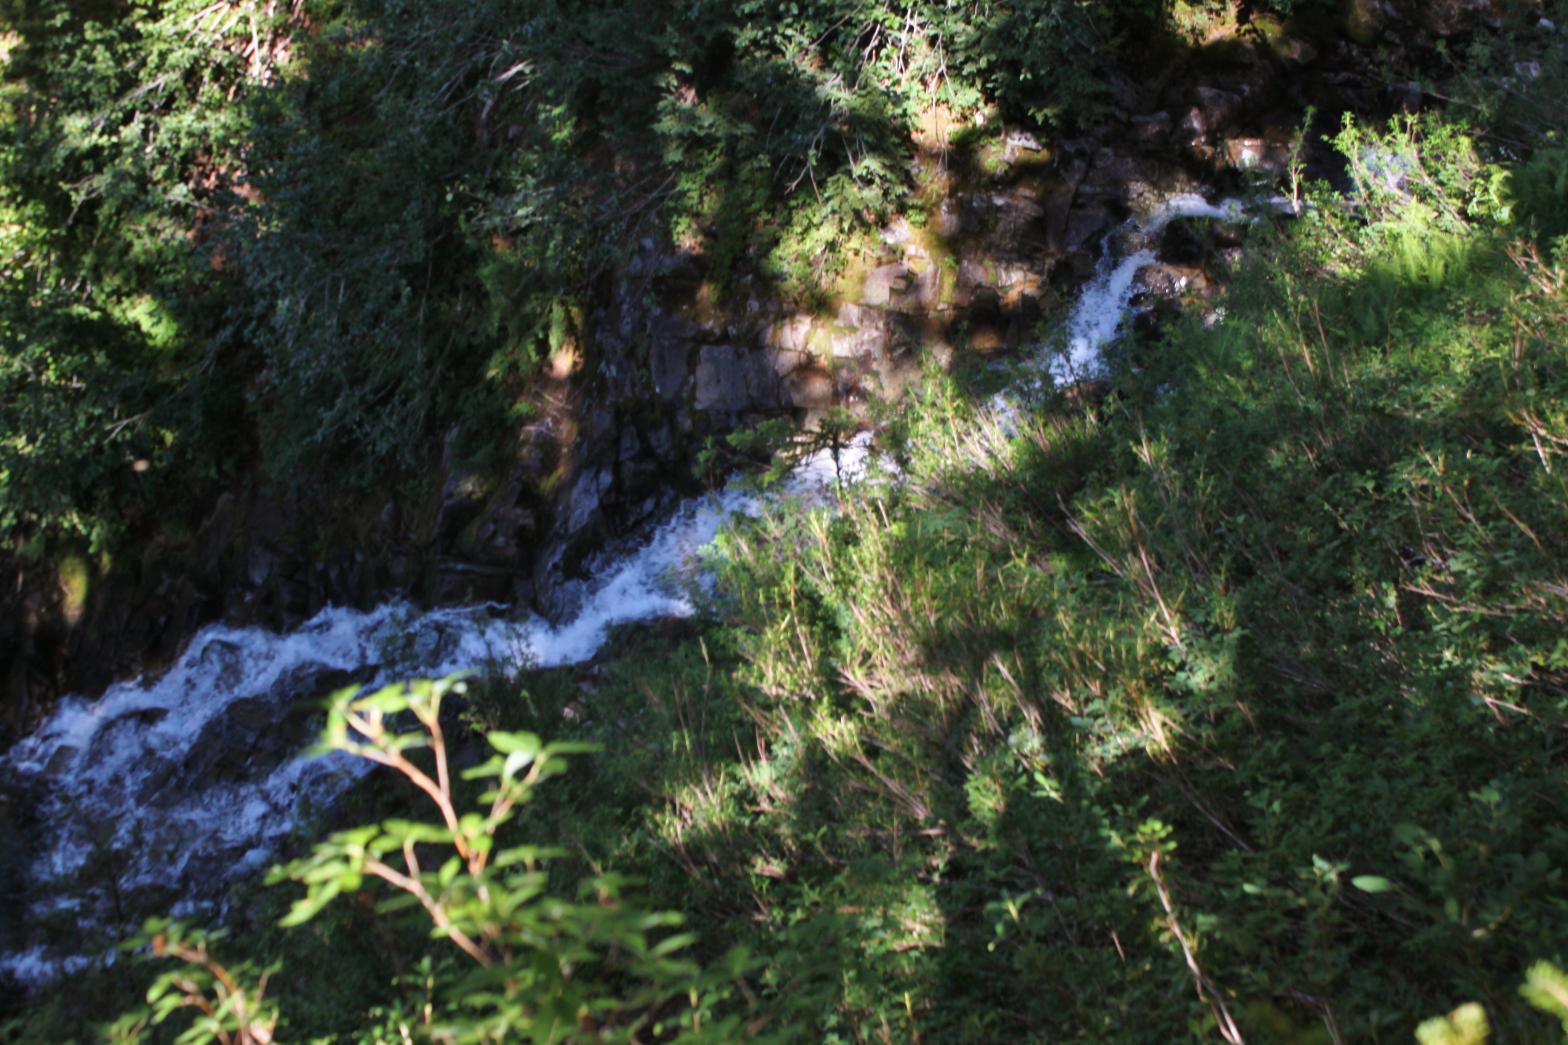 Cascades above the main drop